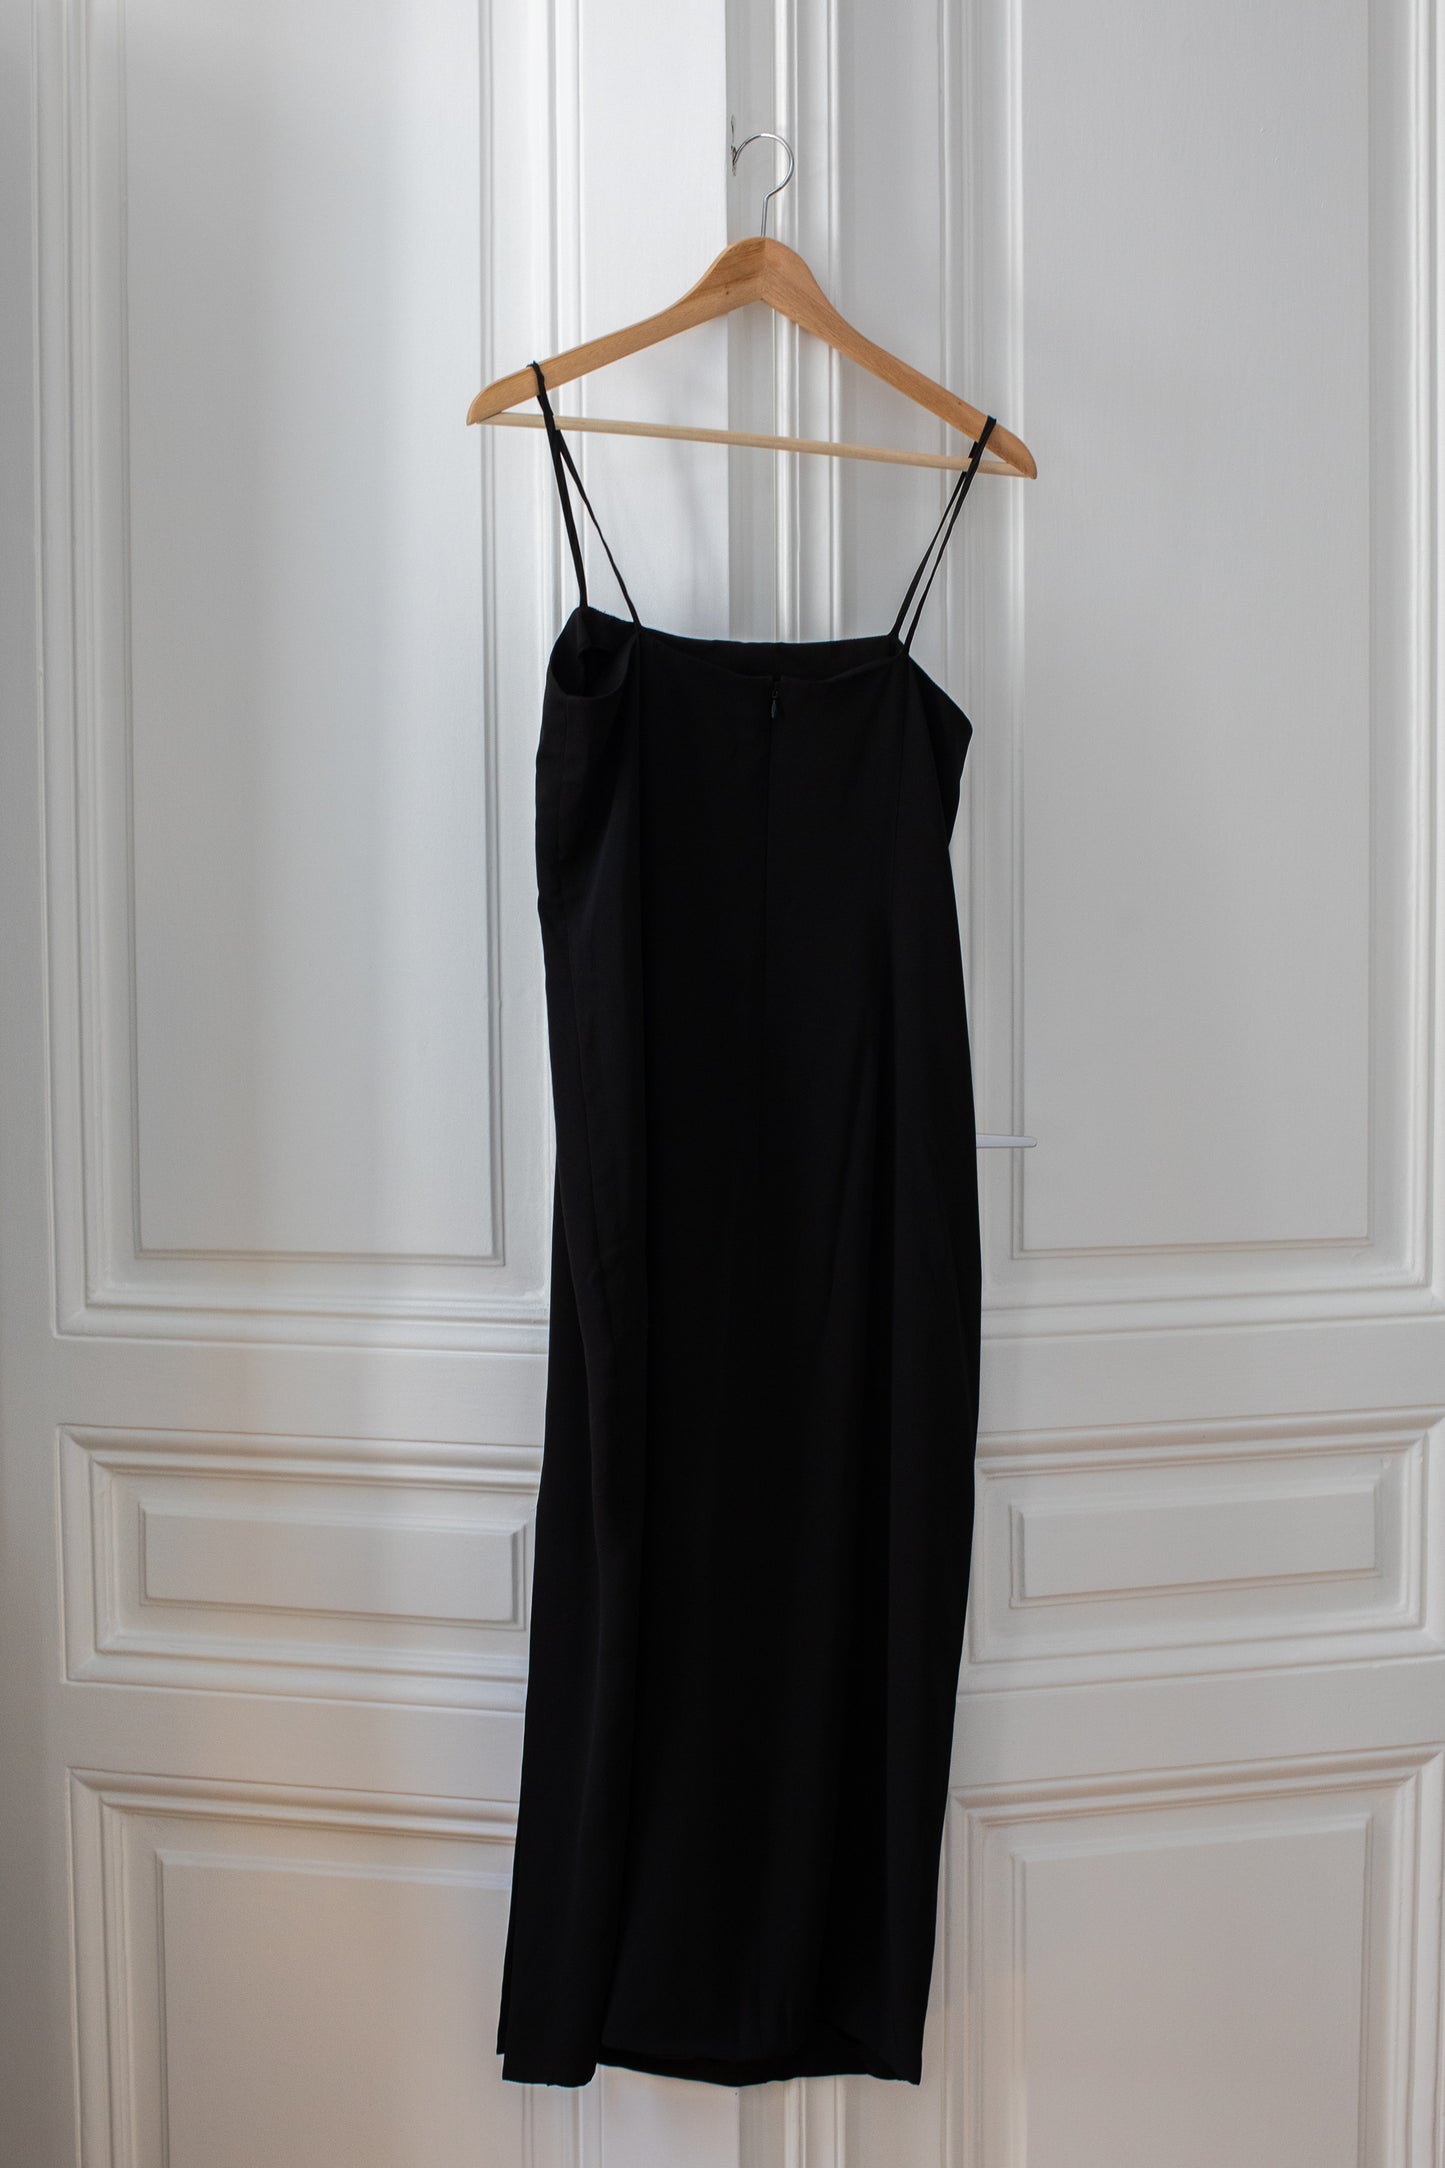 2000's Vintage Black Evening Dress by Max Mara Size S-M